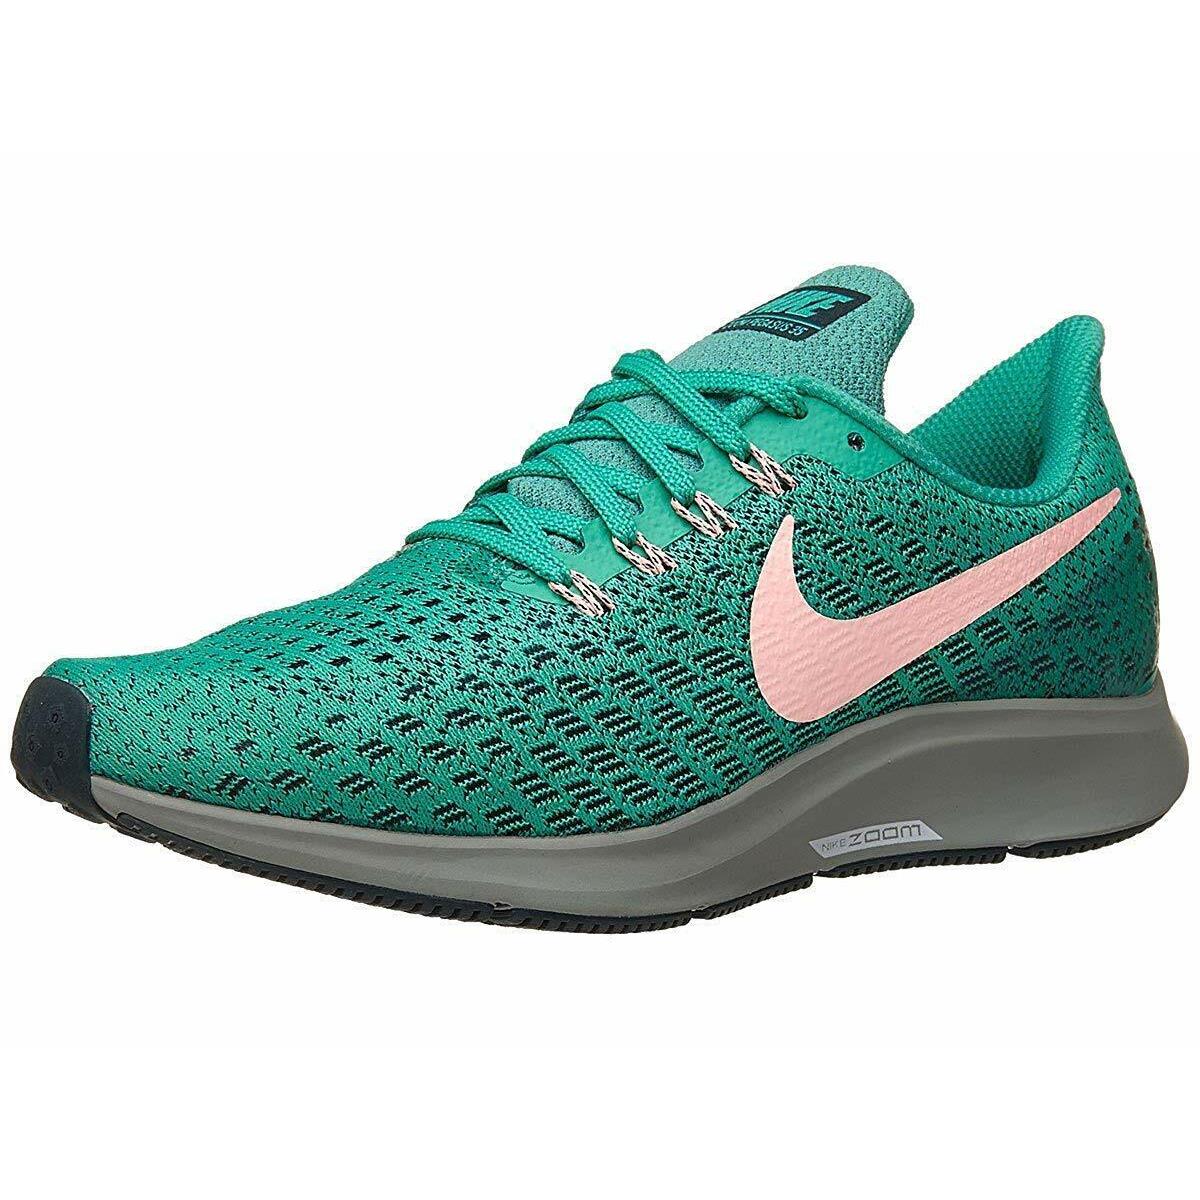 Nike Air Zoom Pegasus 35 Green Pink Running Shoes Women s Size 6.5 - Green